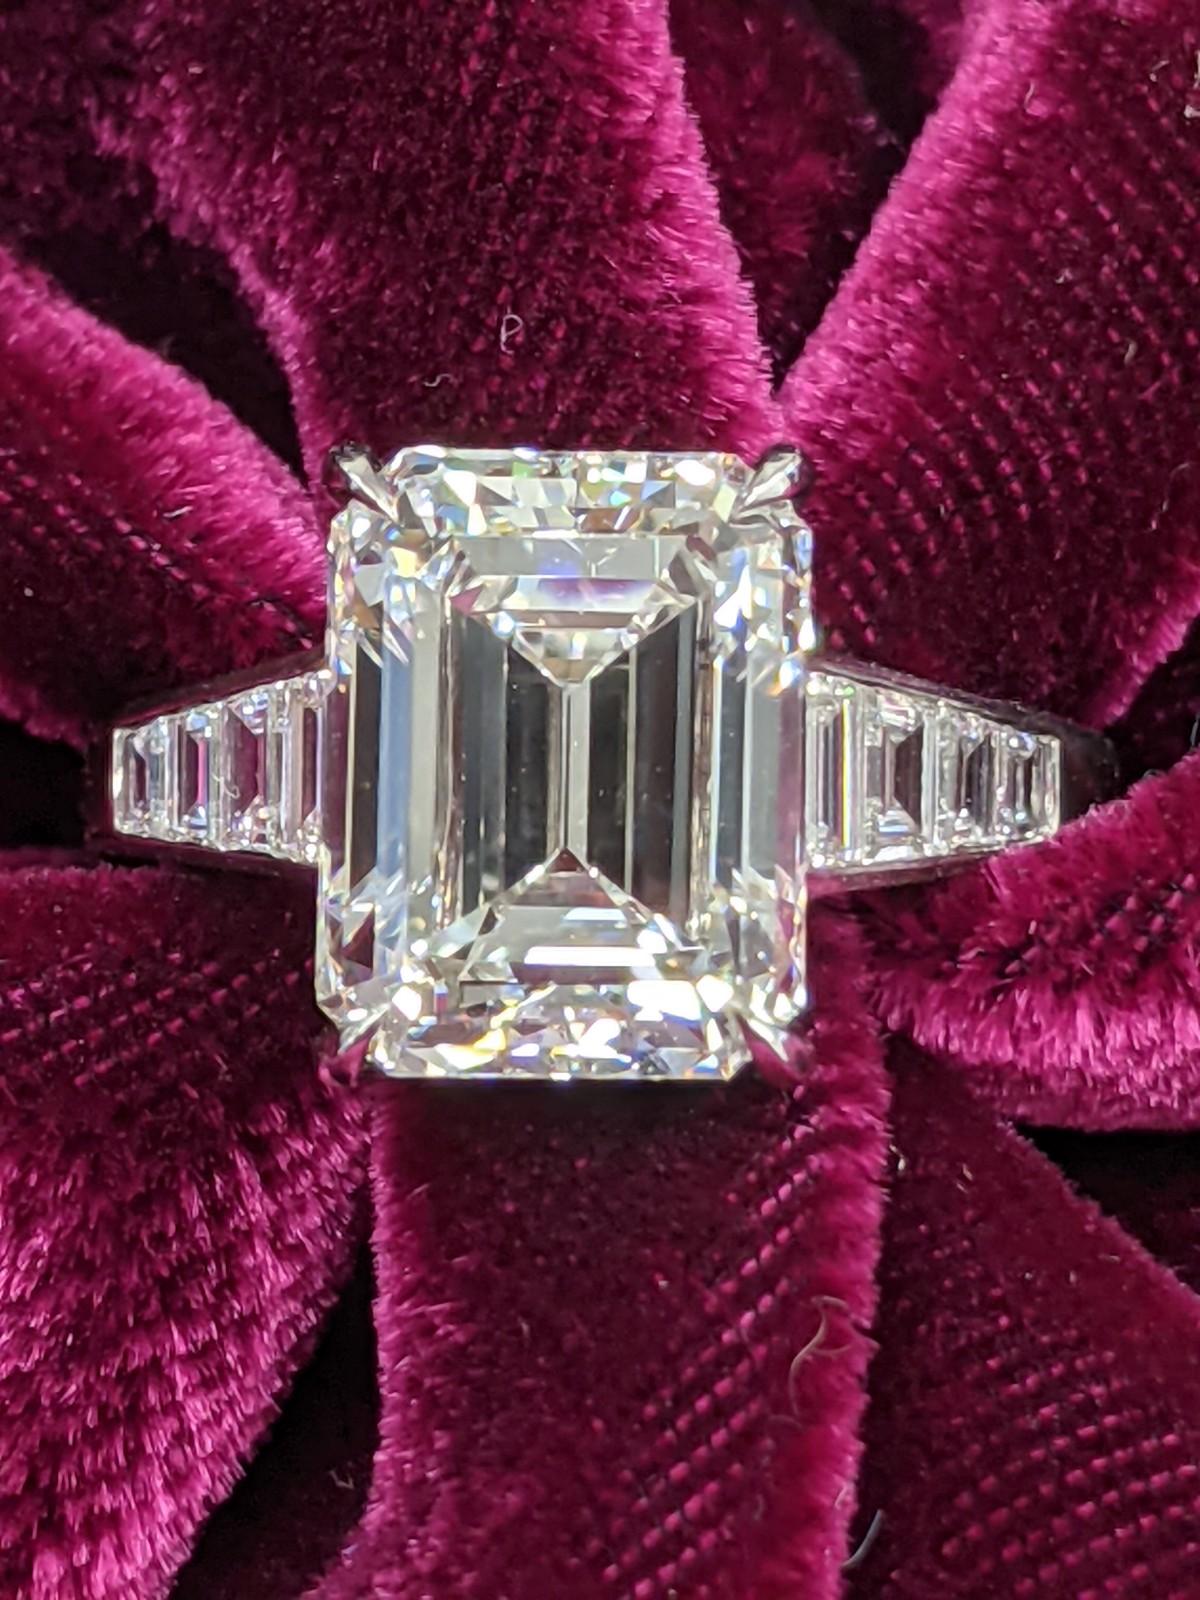 Contemporary 5 Ct. H VVS2 Emerald Cut GIA Certified Diamond Ring in Platinum